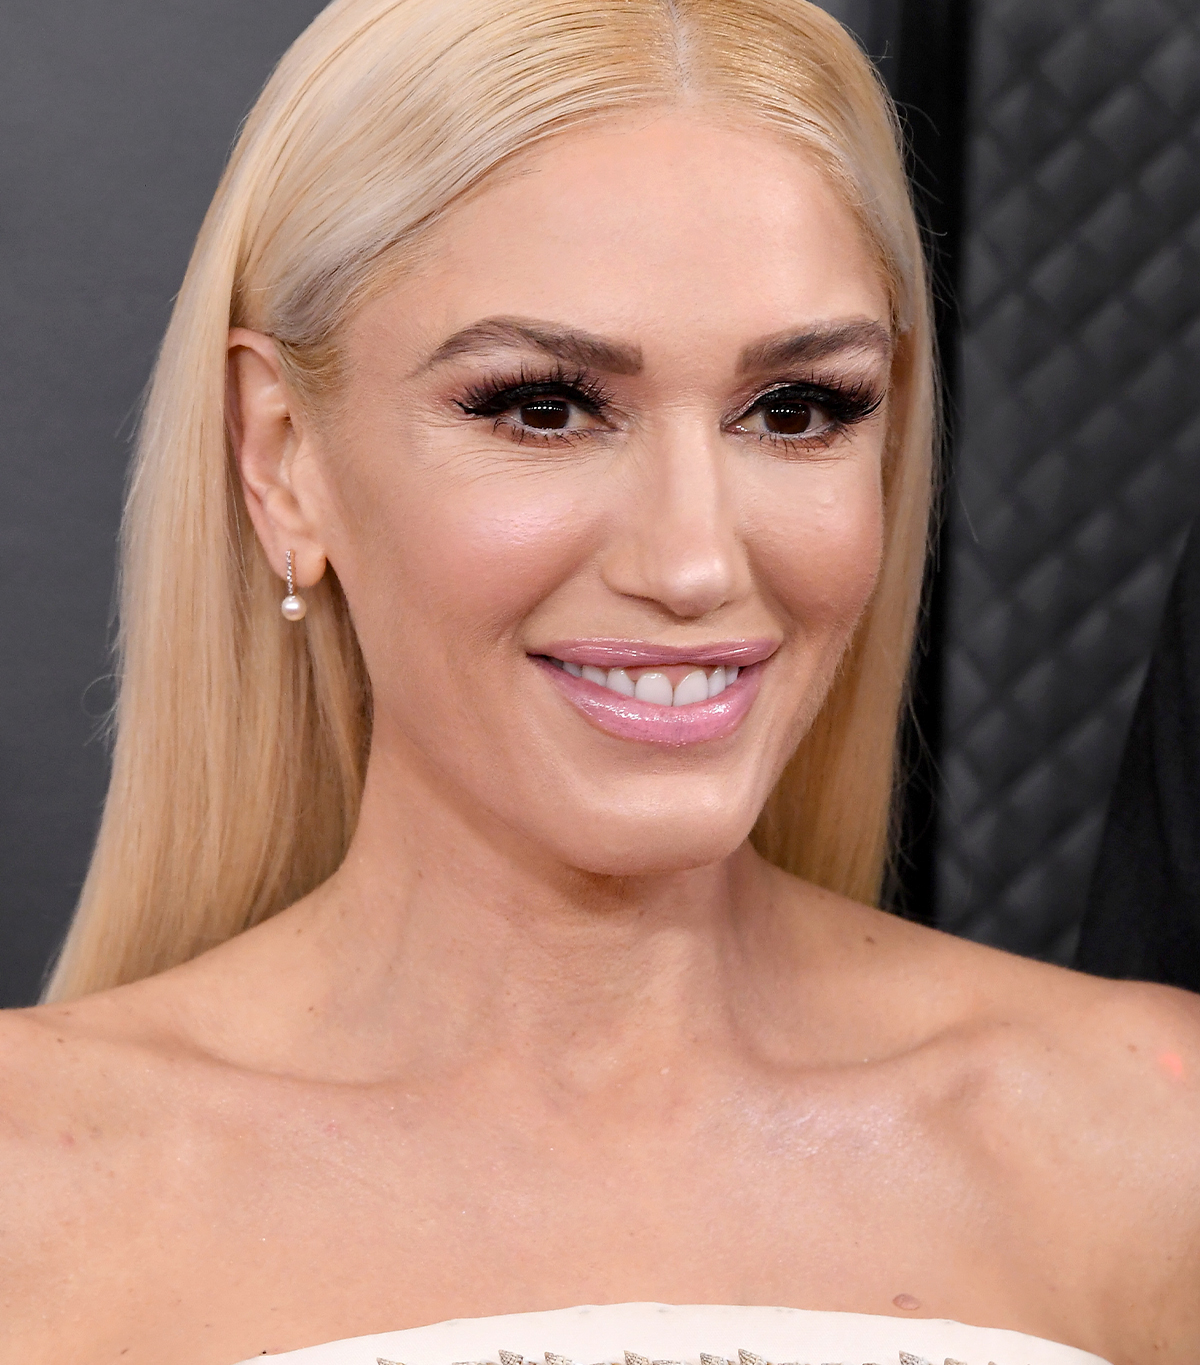 Grammy Awards 2020 Beauty: Gwen Stefani